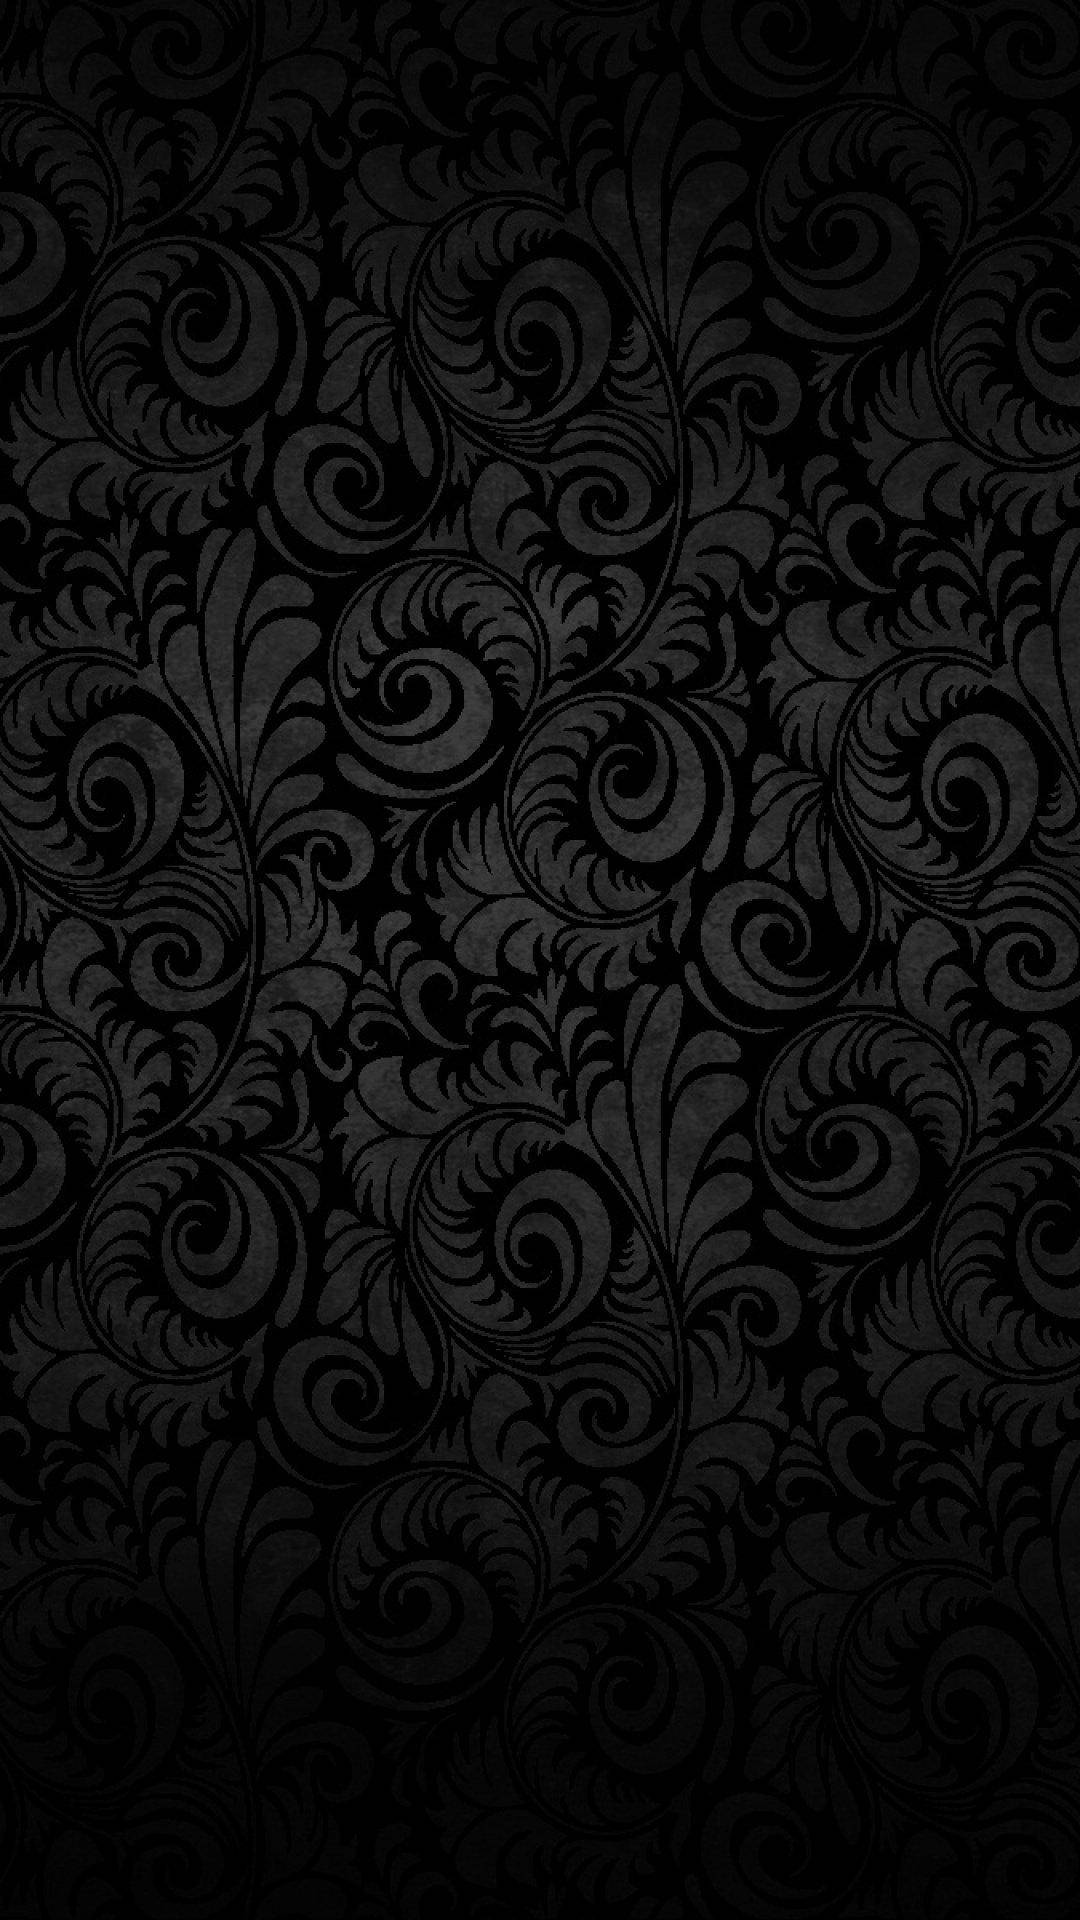 Plain Black With Ornate Leaf Pattern Background